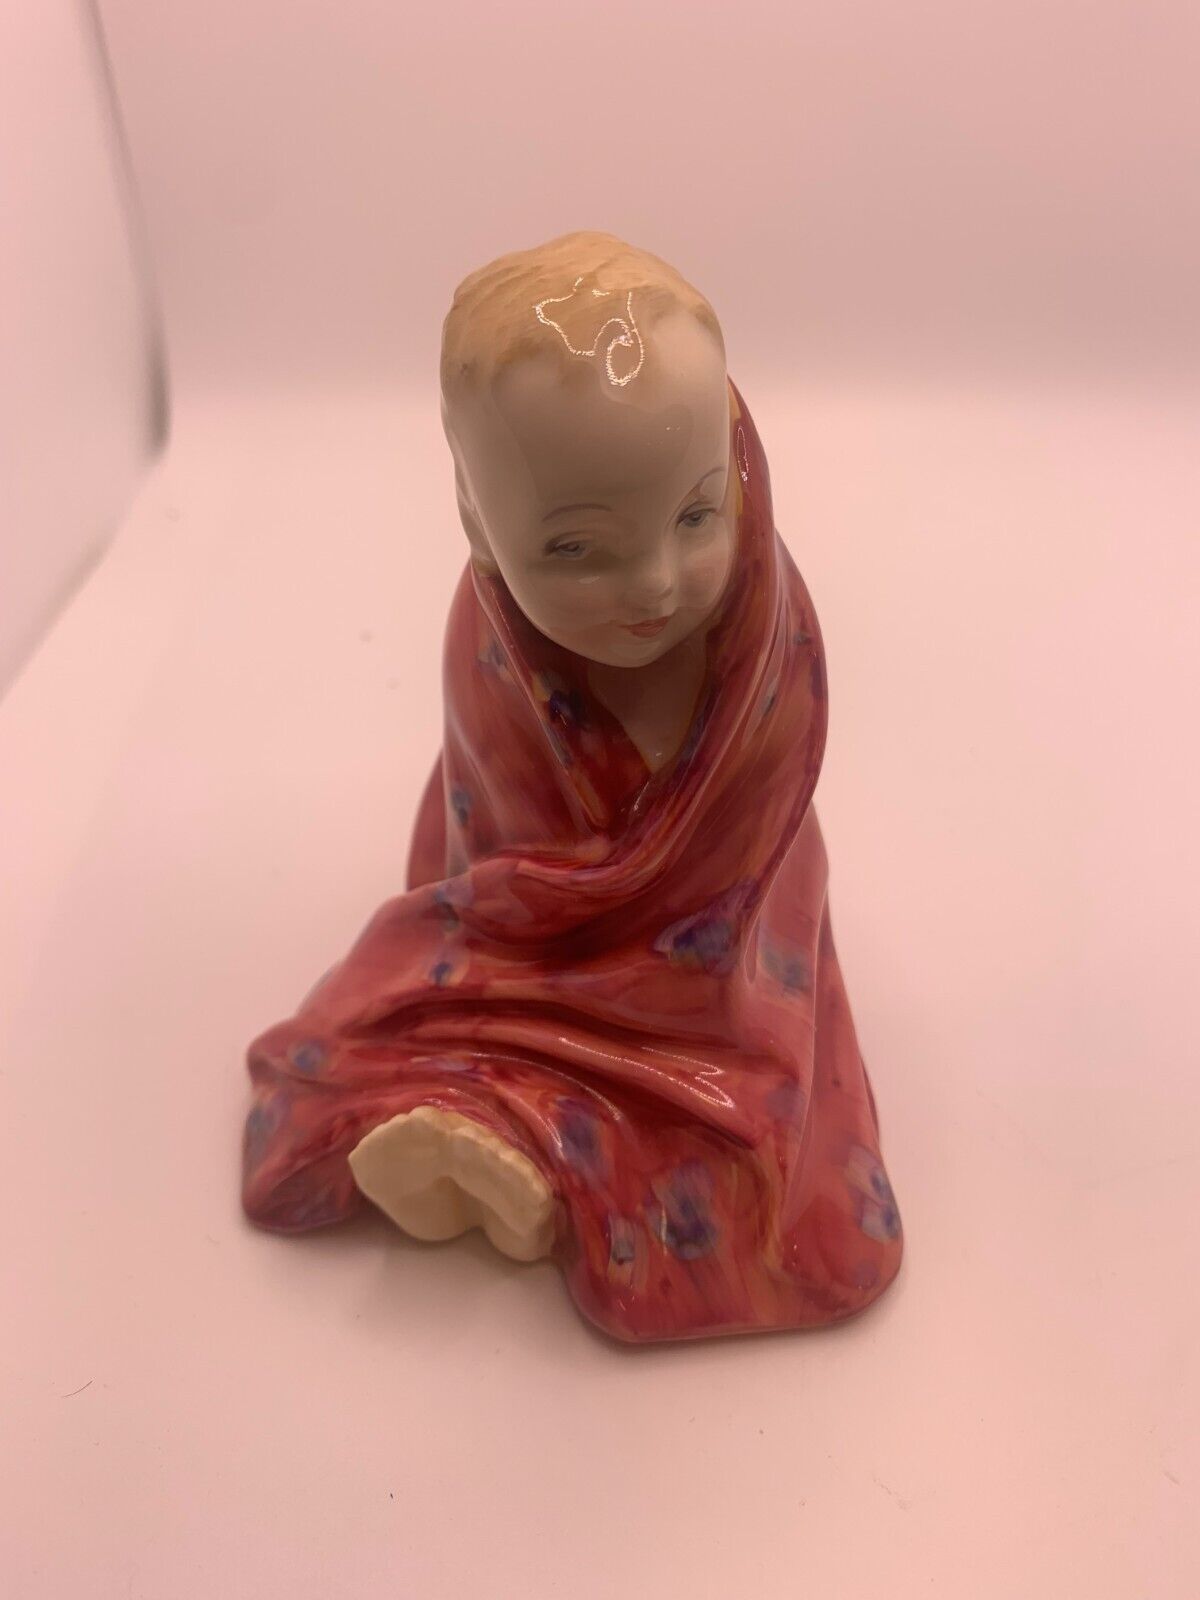 Royal Doulton Bone China Figurine “This Little Pig” HN1793 Leslie Harradine BABY